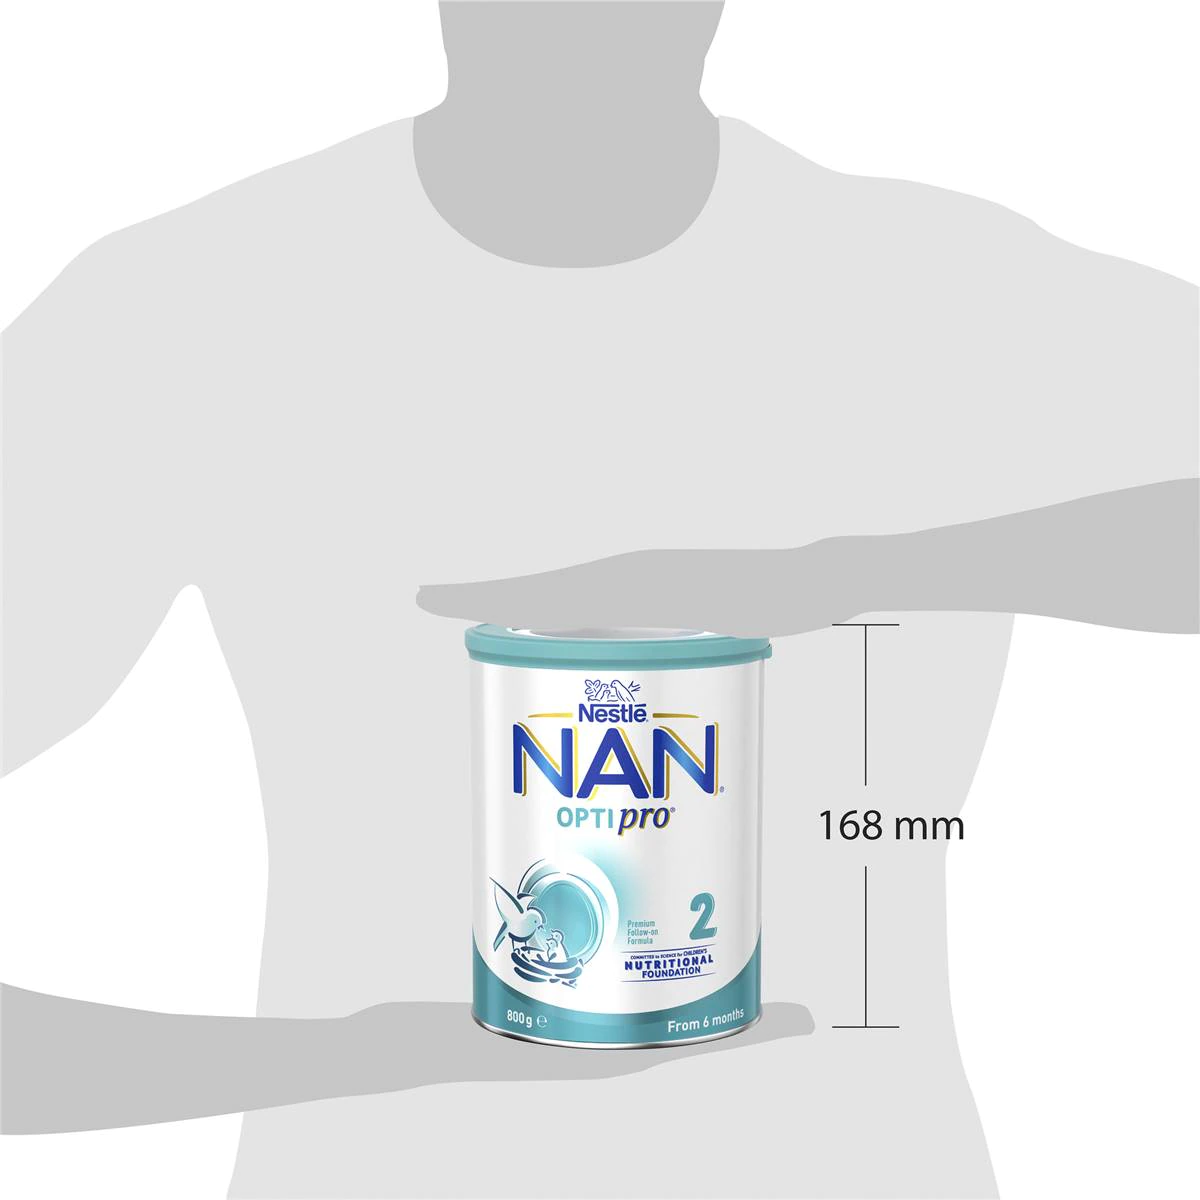 Nestle Nan Optipro 2 Follow On Milk 800gr